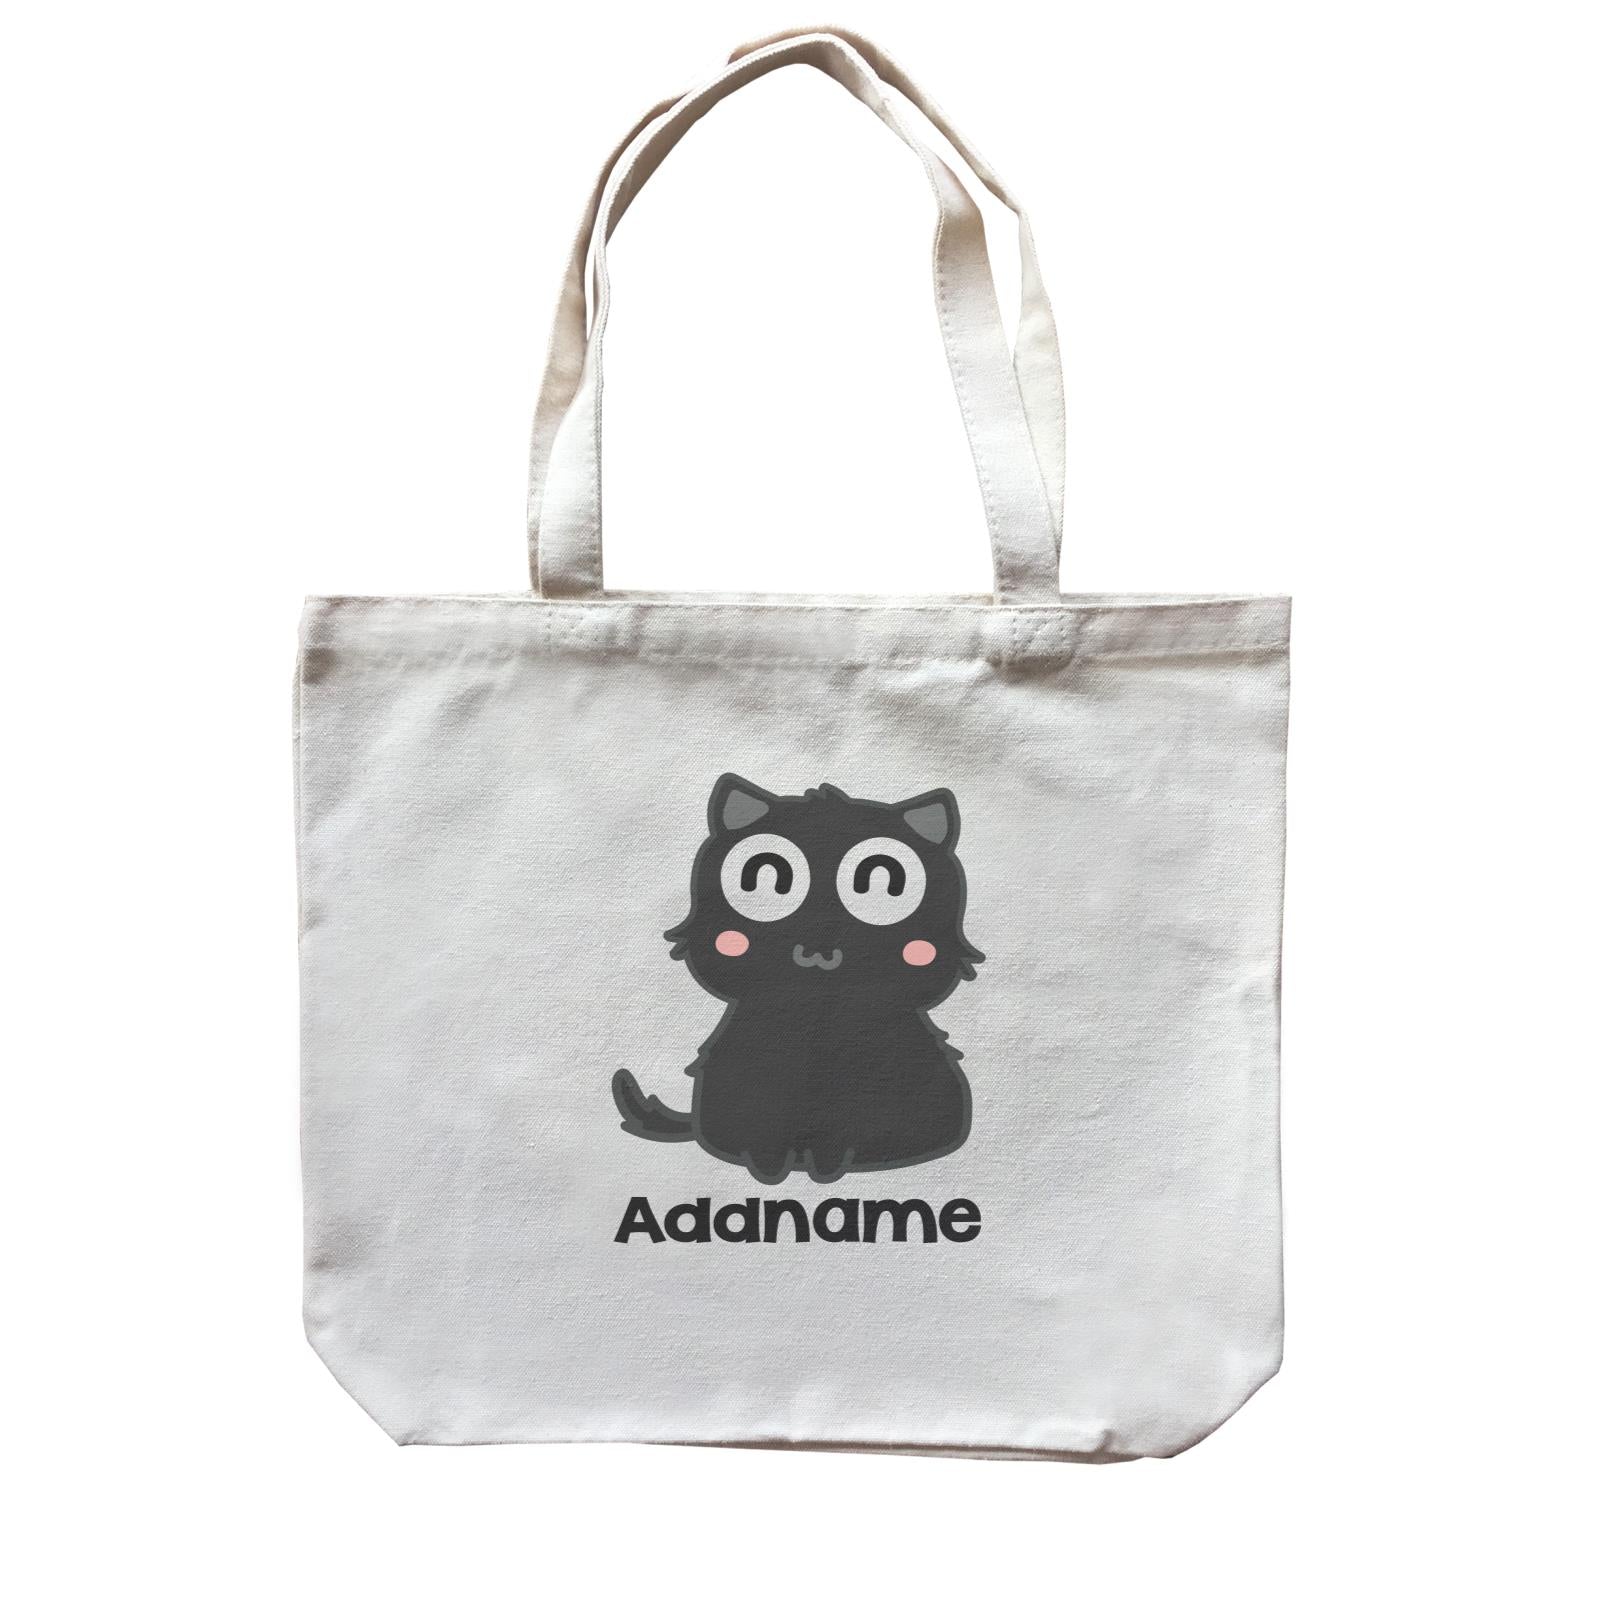 Drawn Adorable Cats Black Addname Canvas Bag